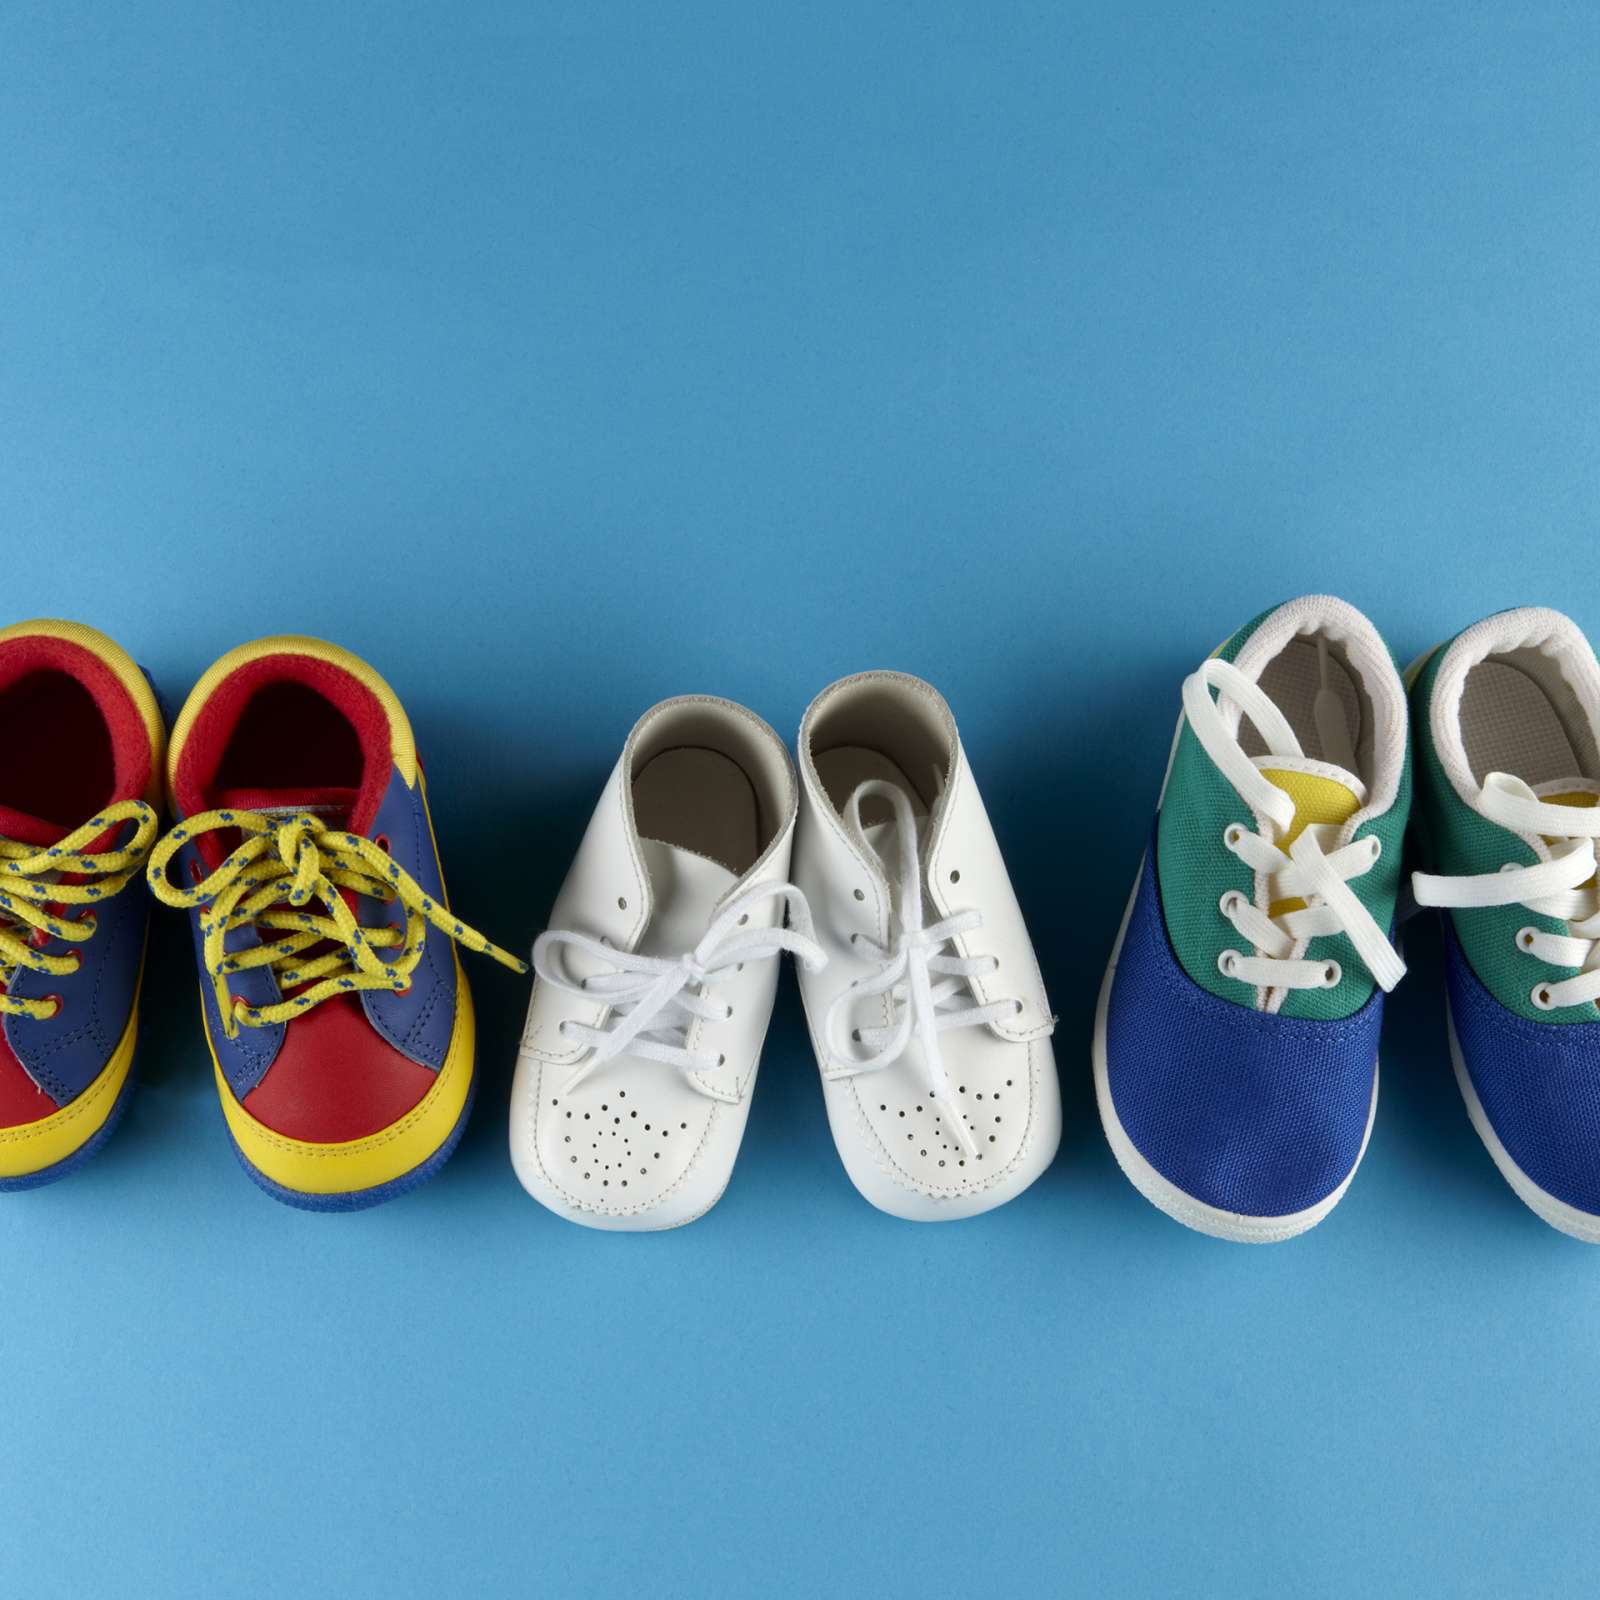 Lasten kengät – ostajan opas